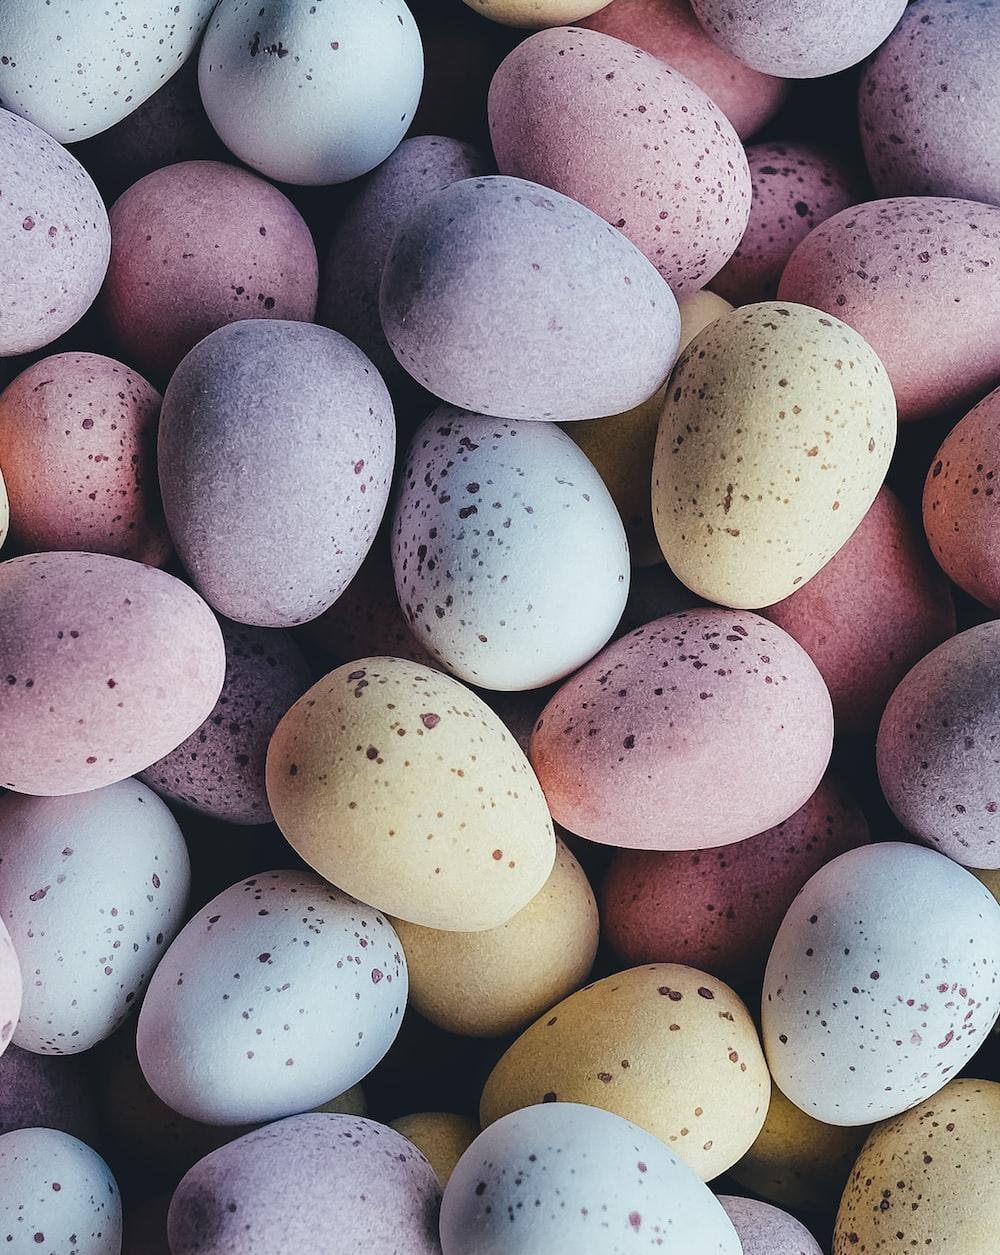 Chocolate Mini Eggs Photo Food Image